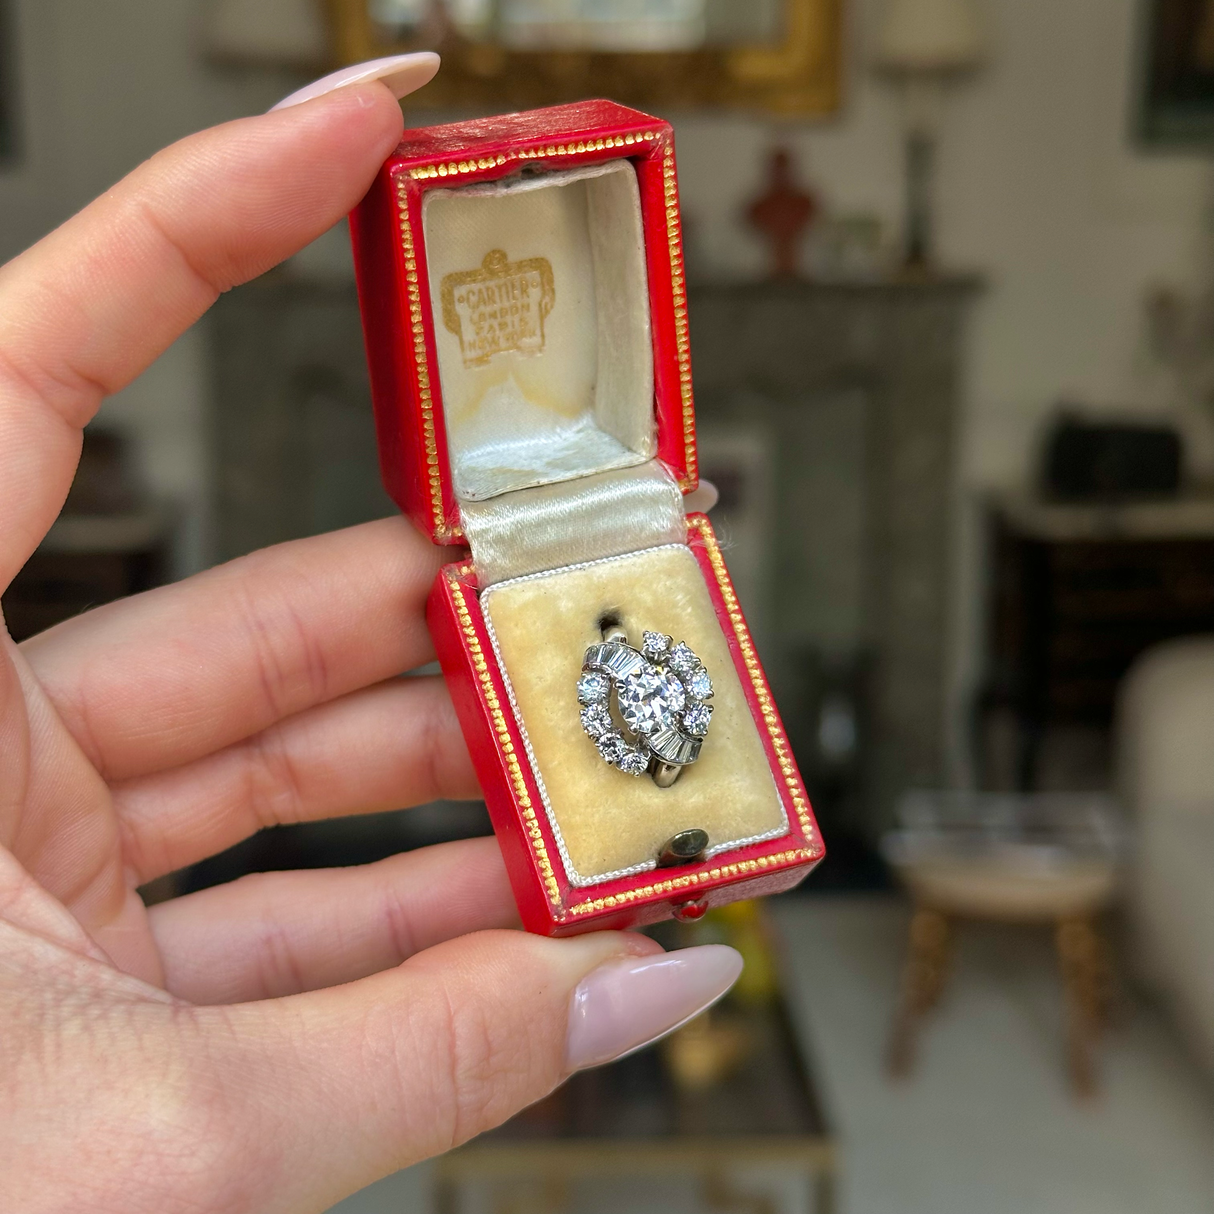 Cartier Diamond Engagement Ring in antique cartier box.